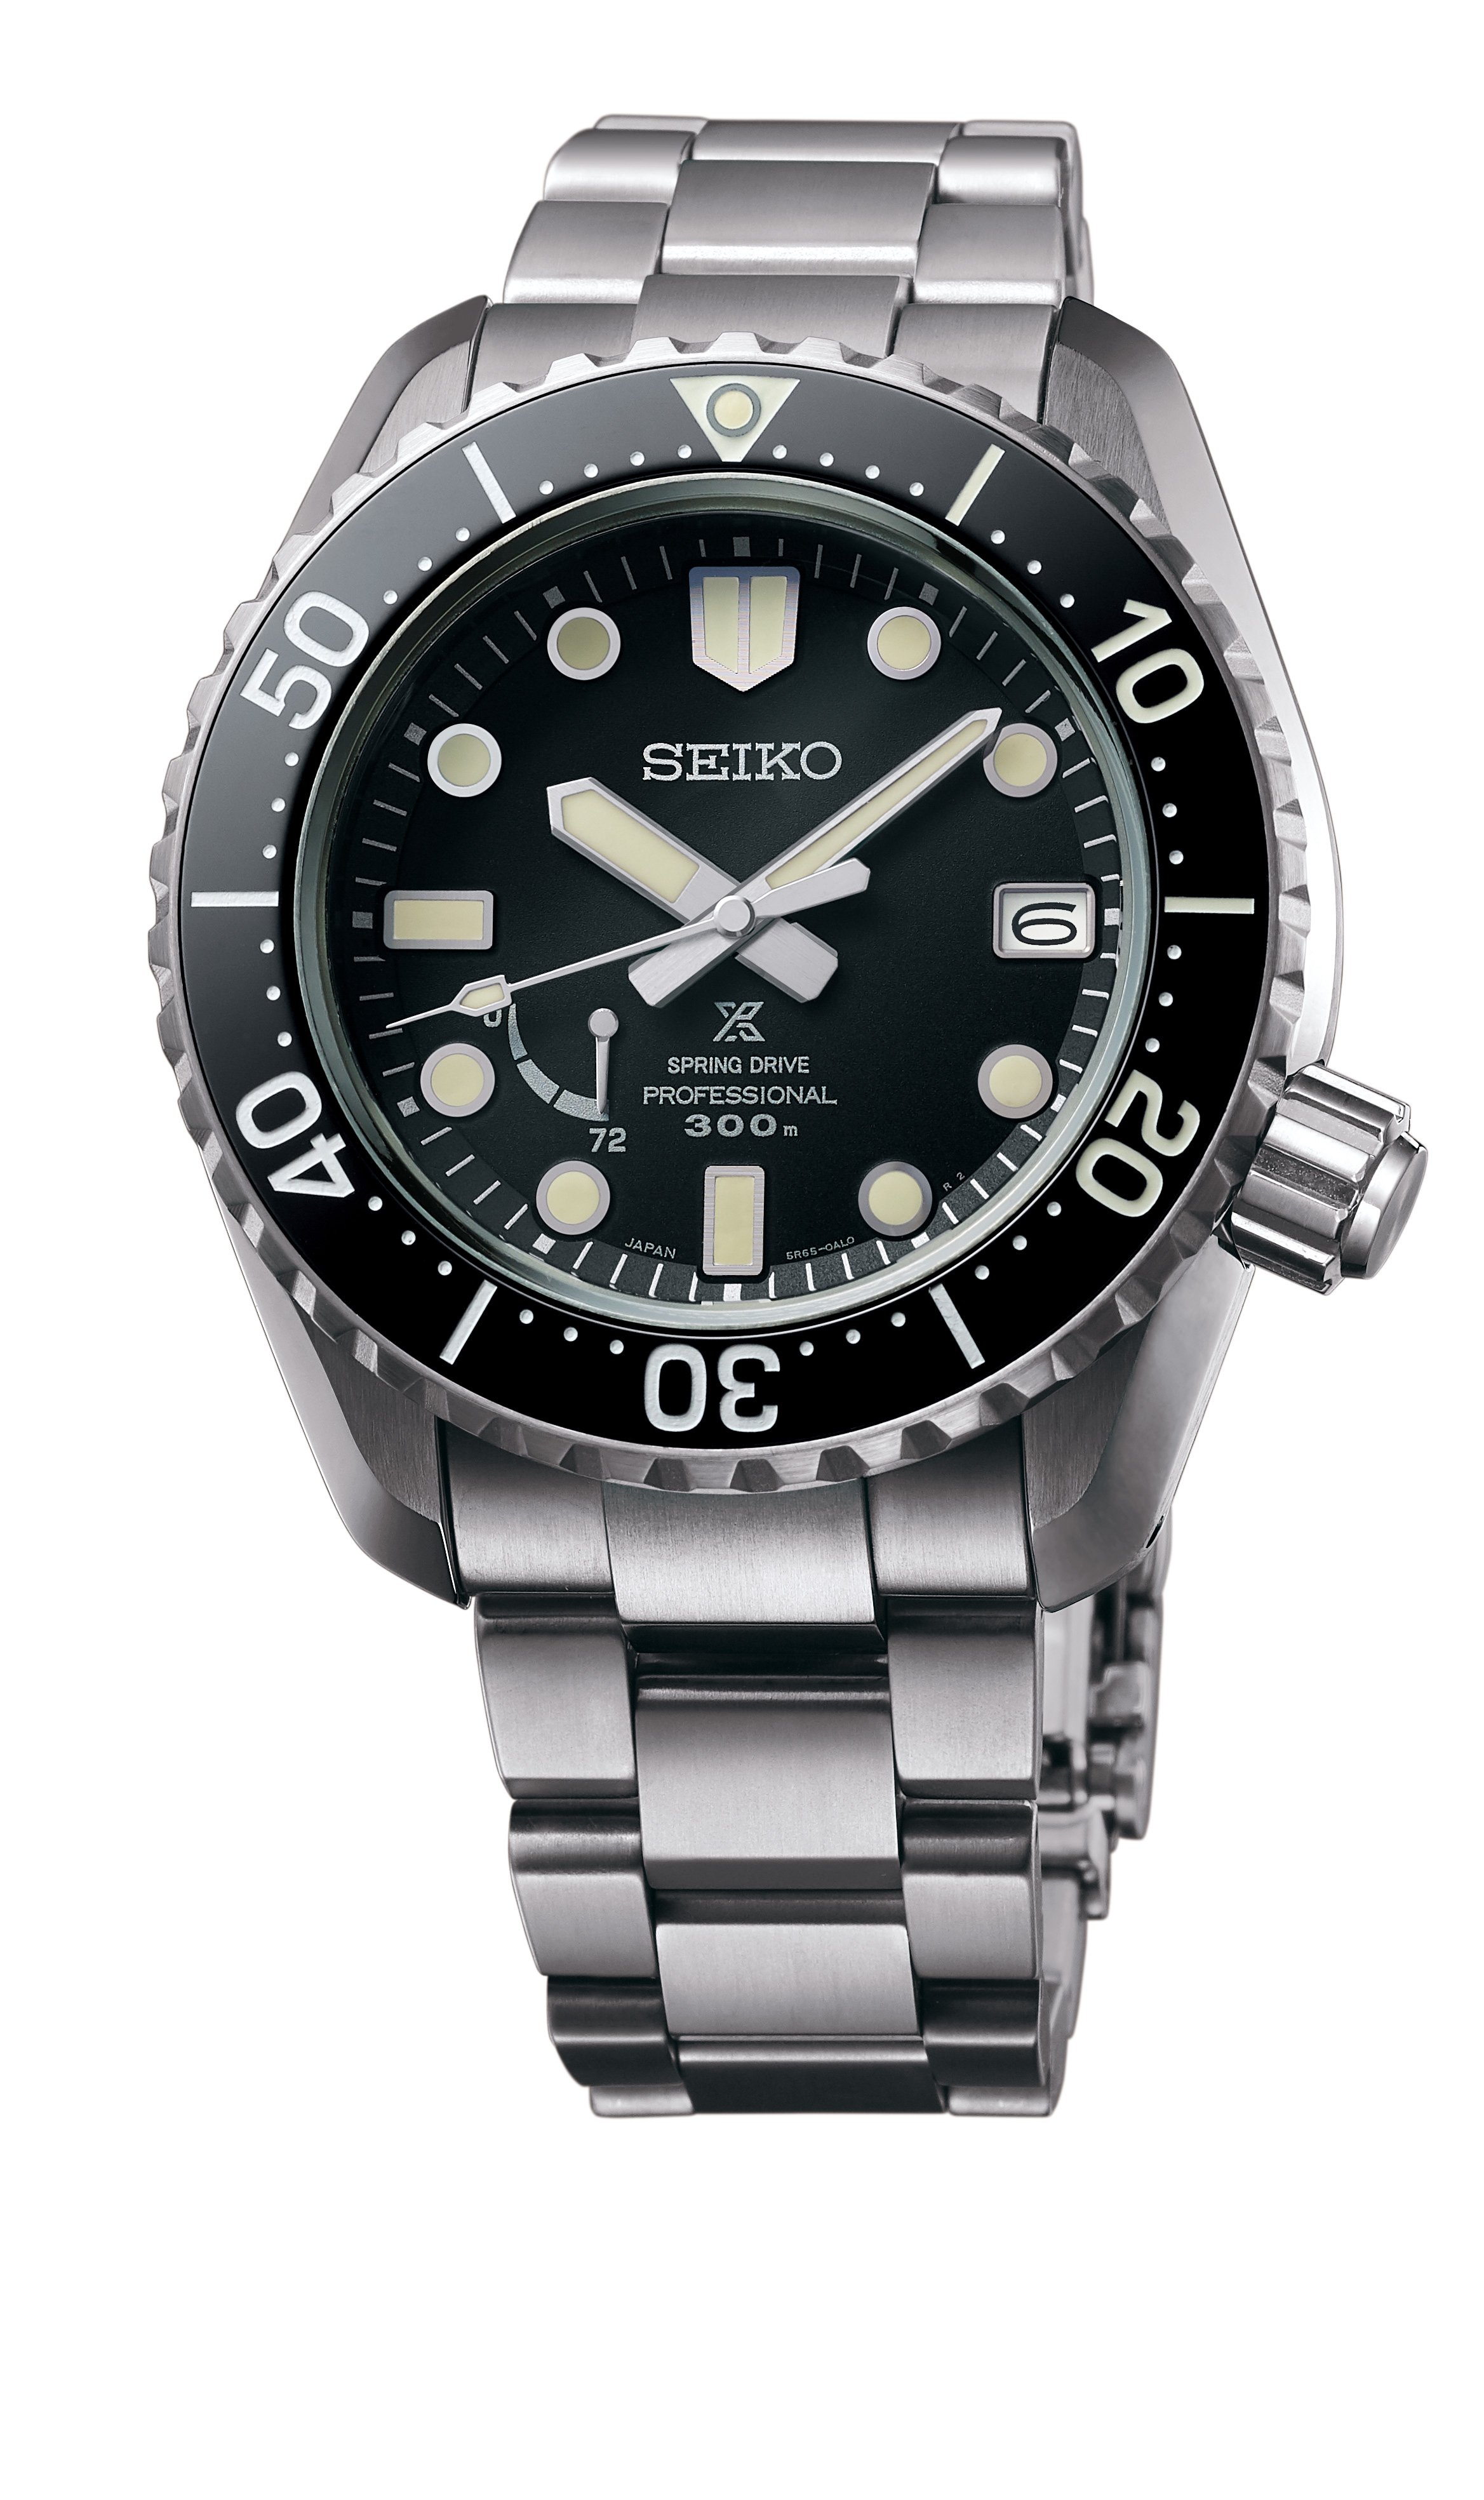 Die Armbanduhr von Seiko Prospex LX